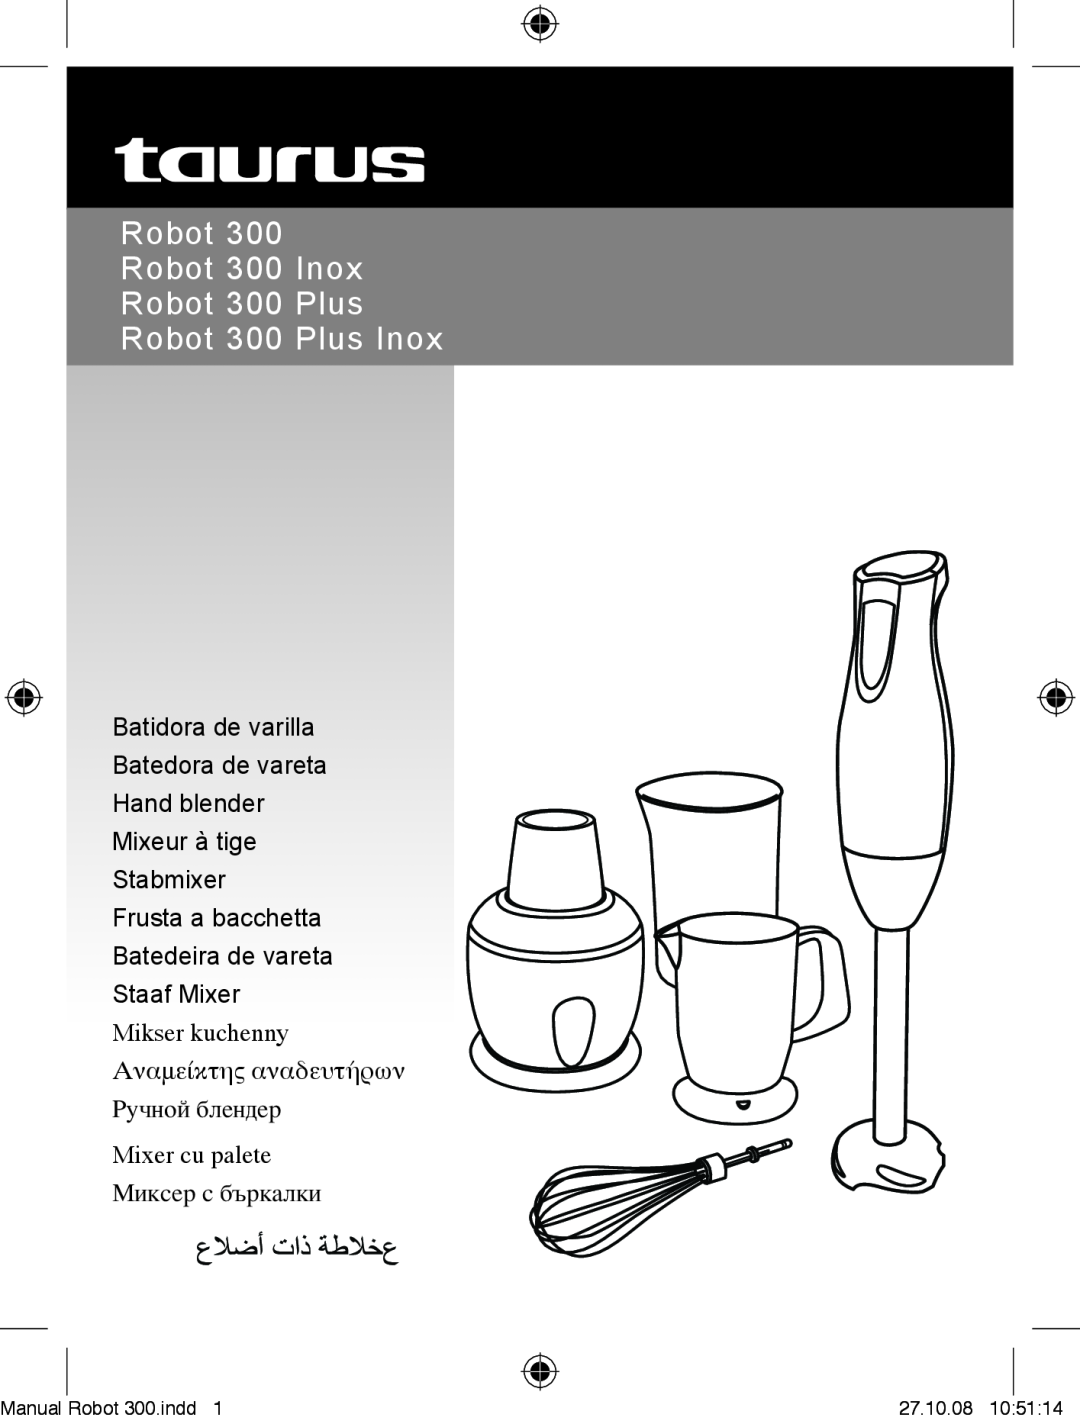 Taurus Group manual Batidora de varilla Batedora de vareta Hand blender Mixeur à tige, Manual, Robot 300.indd, 27.10.08 